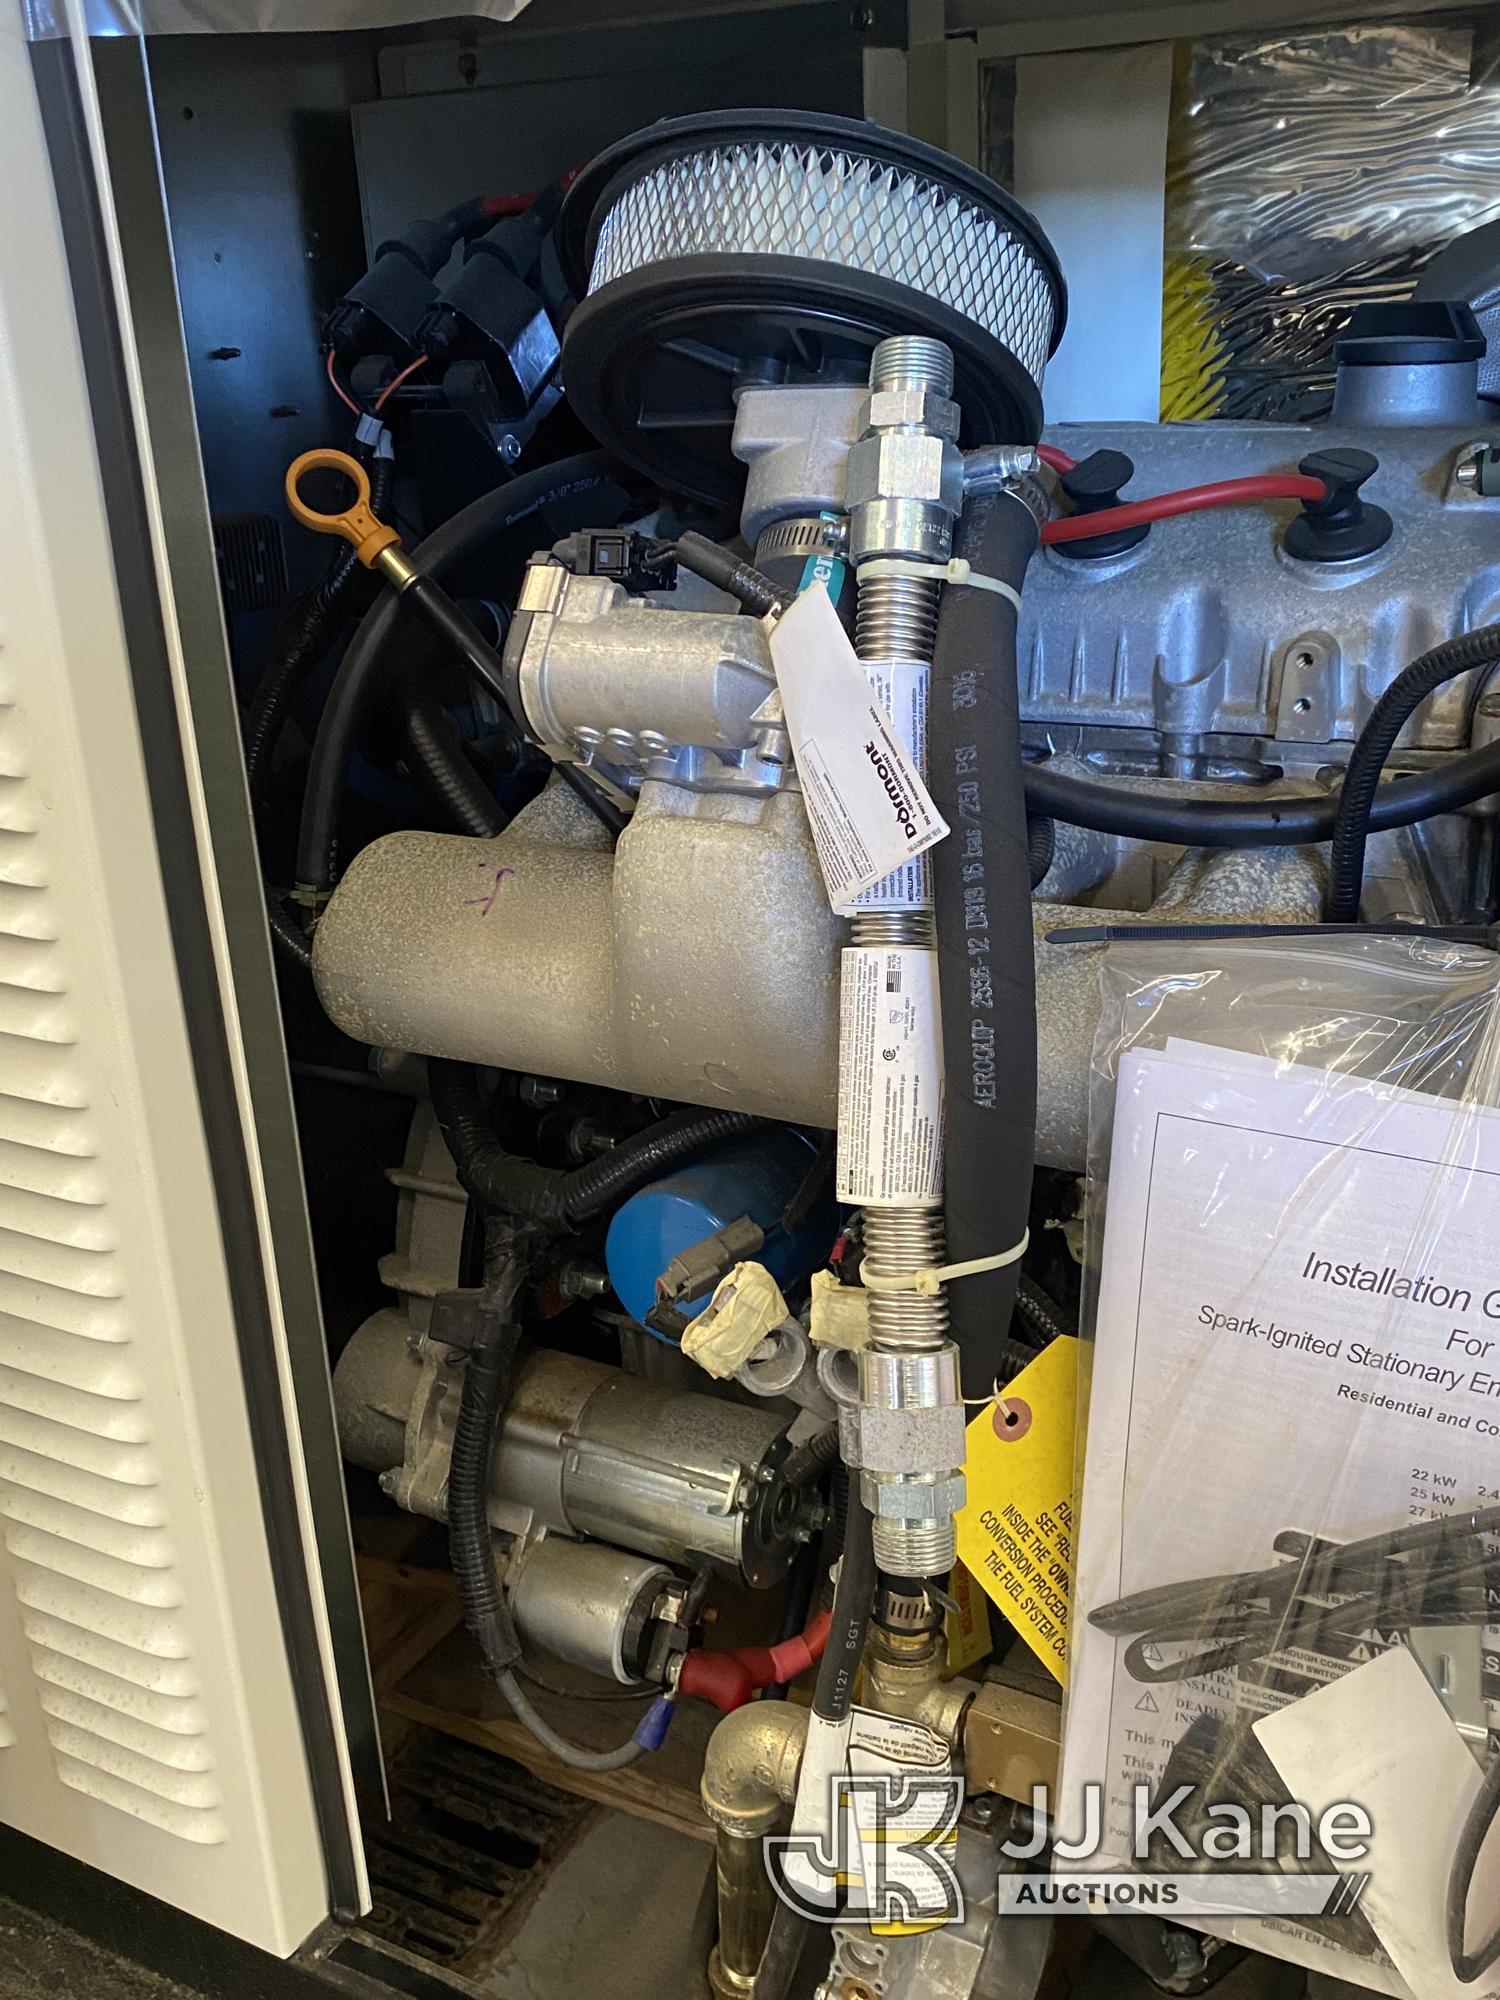 (South Beloit, IL) Generac RG03015JNAX Generac Protector Series 30kW Automatic Standby Generator. Ne